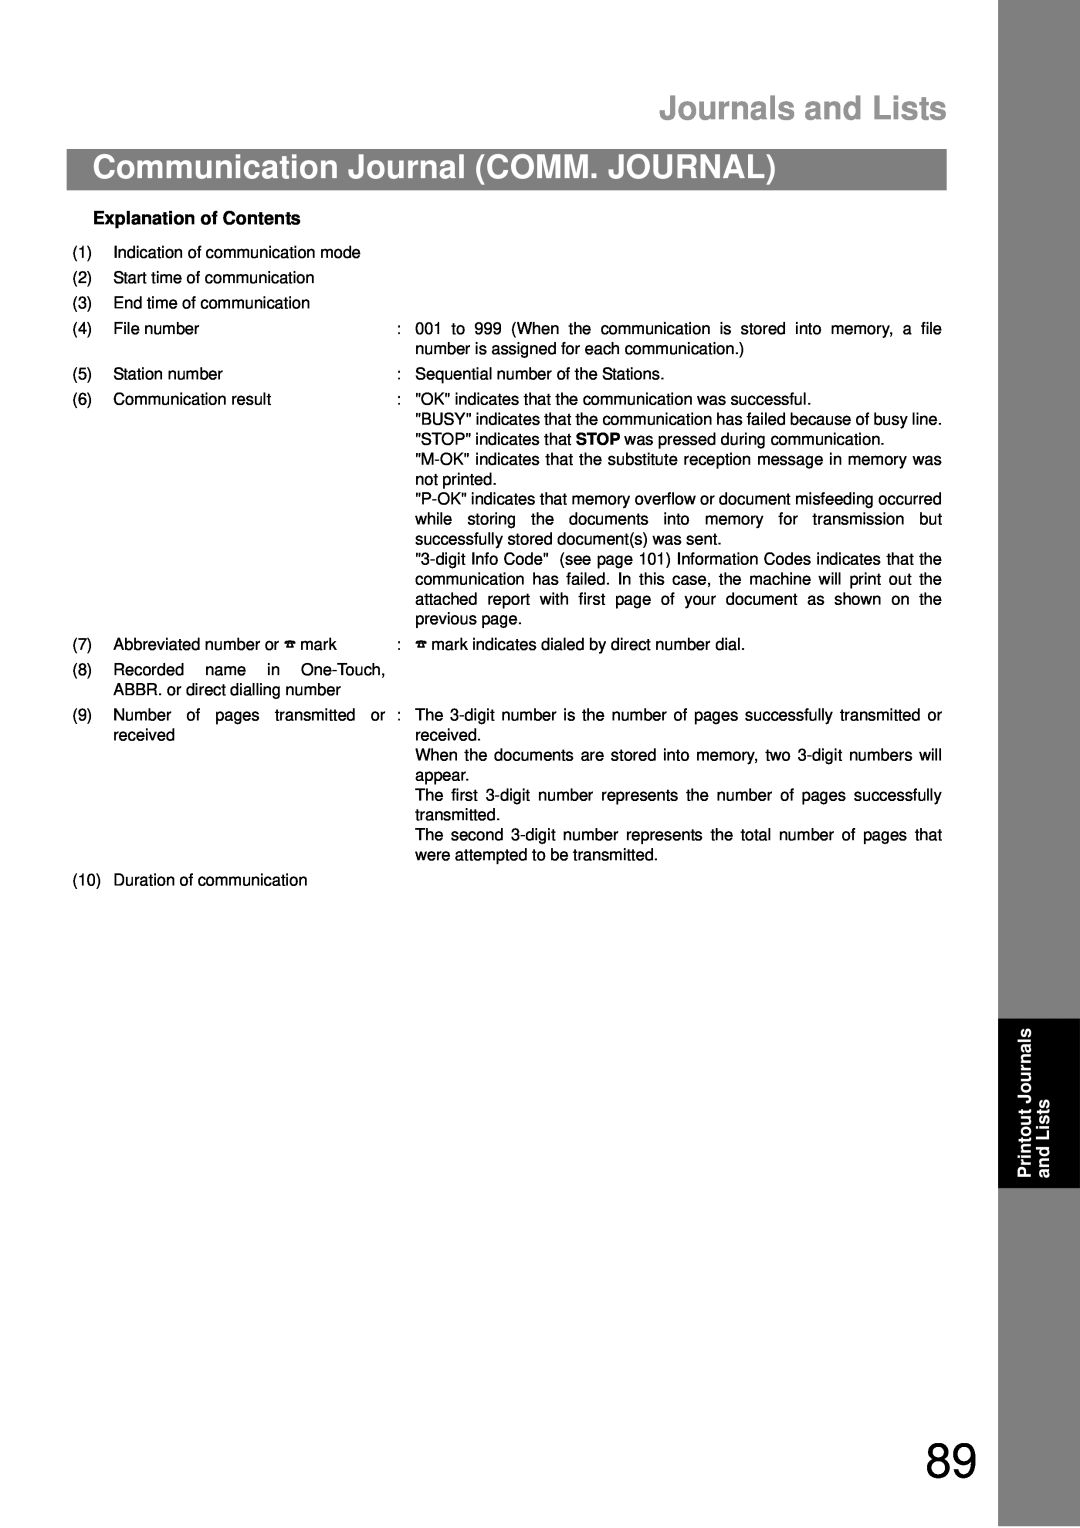 Castelle UF-490 appendix Journals and Lists, Communication Journal COMM. JOURNAL, Explanation of Contents 